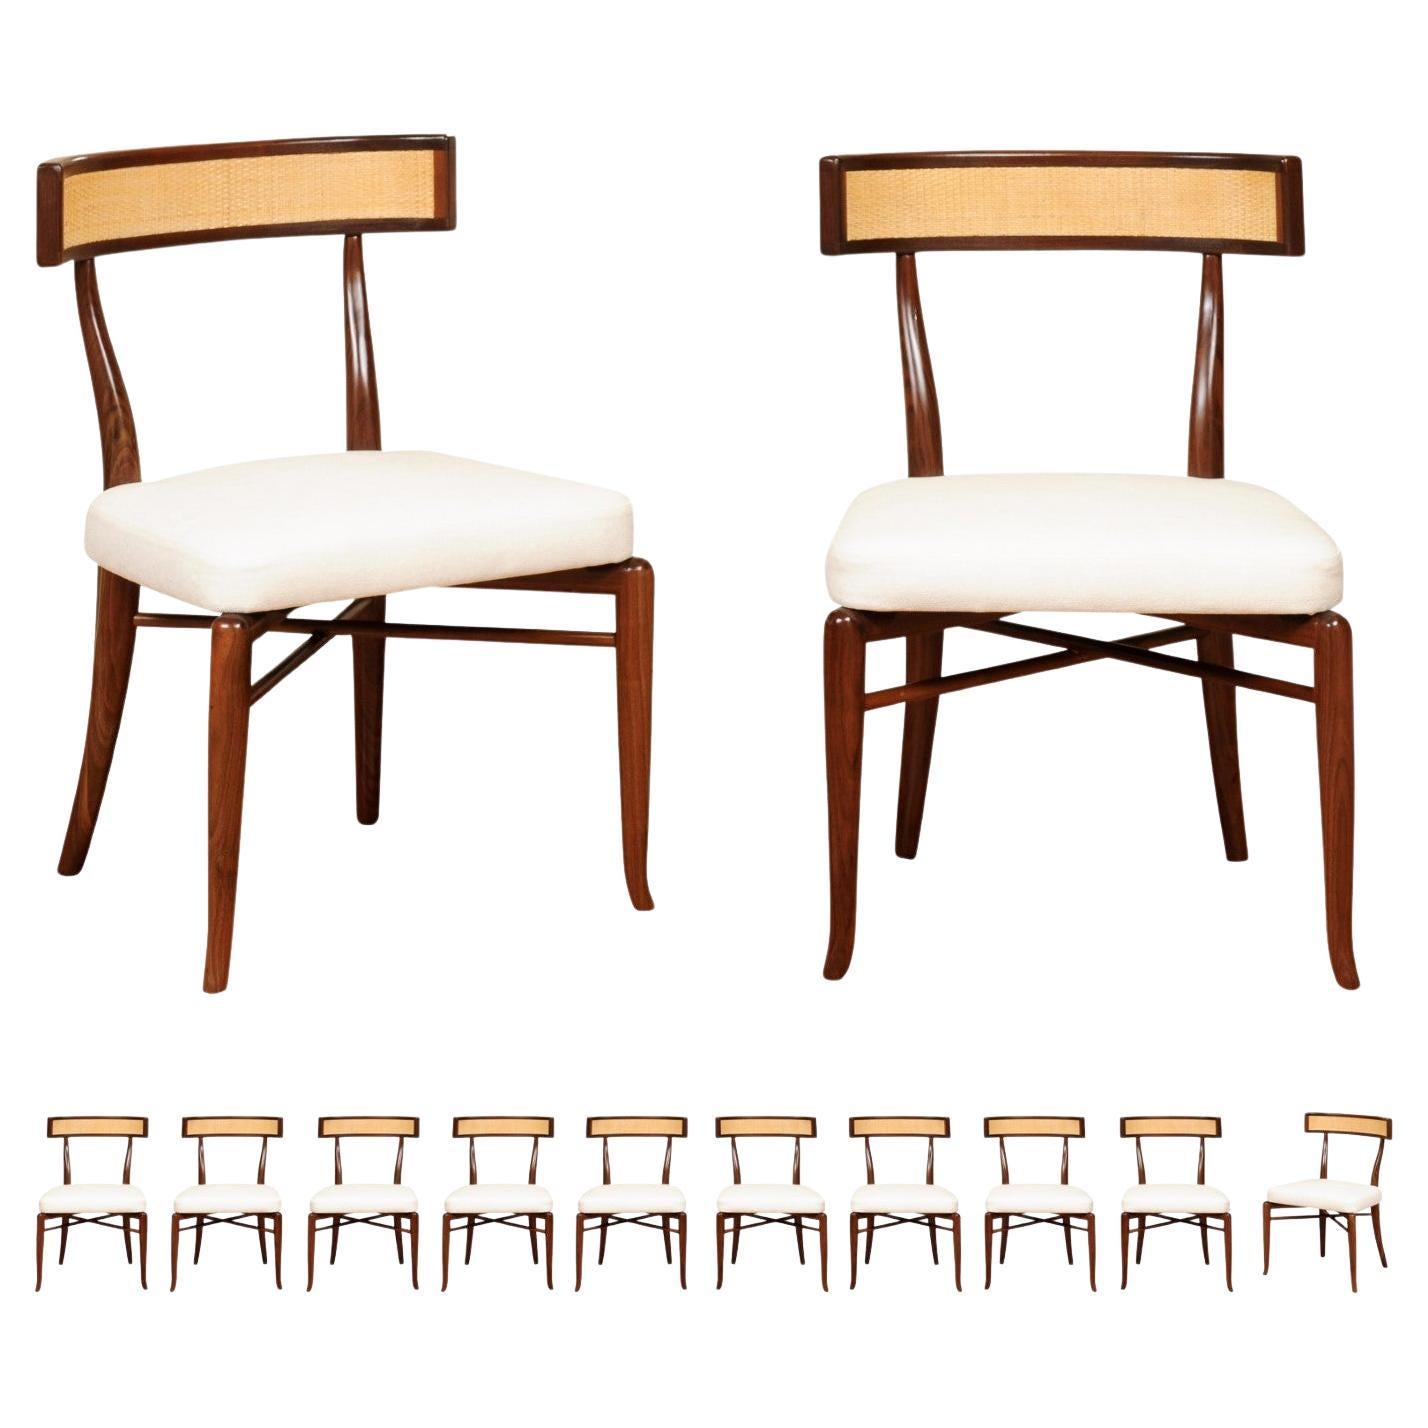 Extraordinary Set of 12 Klismos Side Chairs by Robsjohn-Gibbings, Cane Back